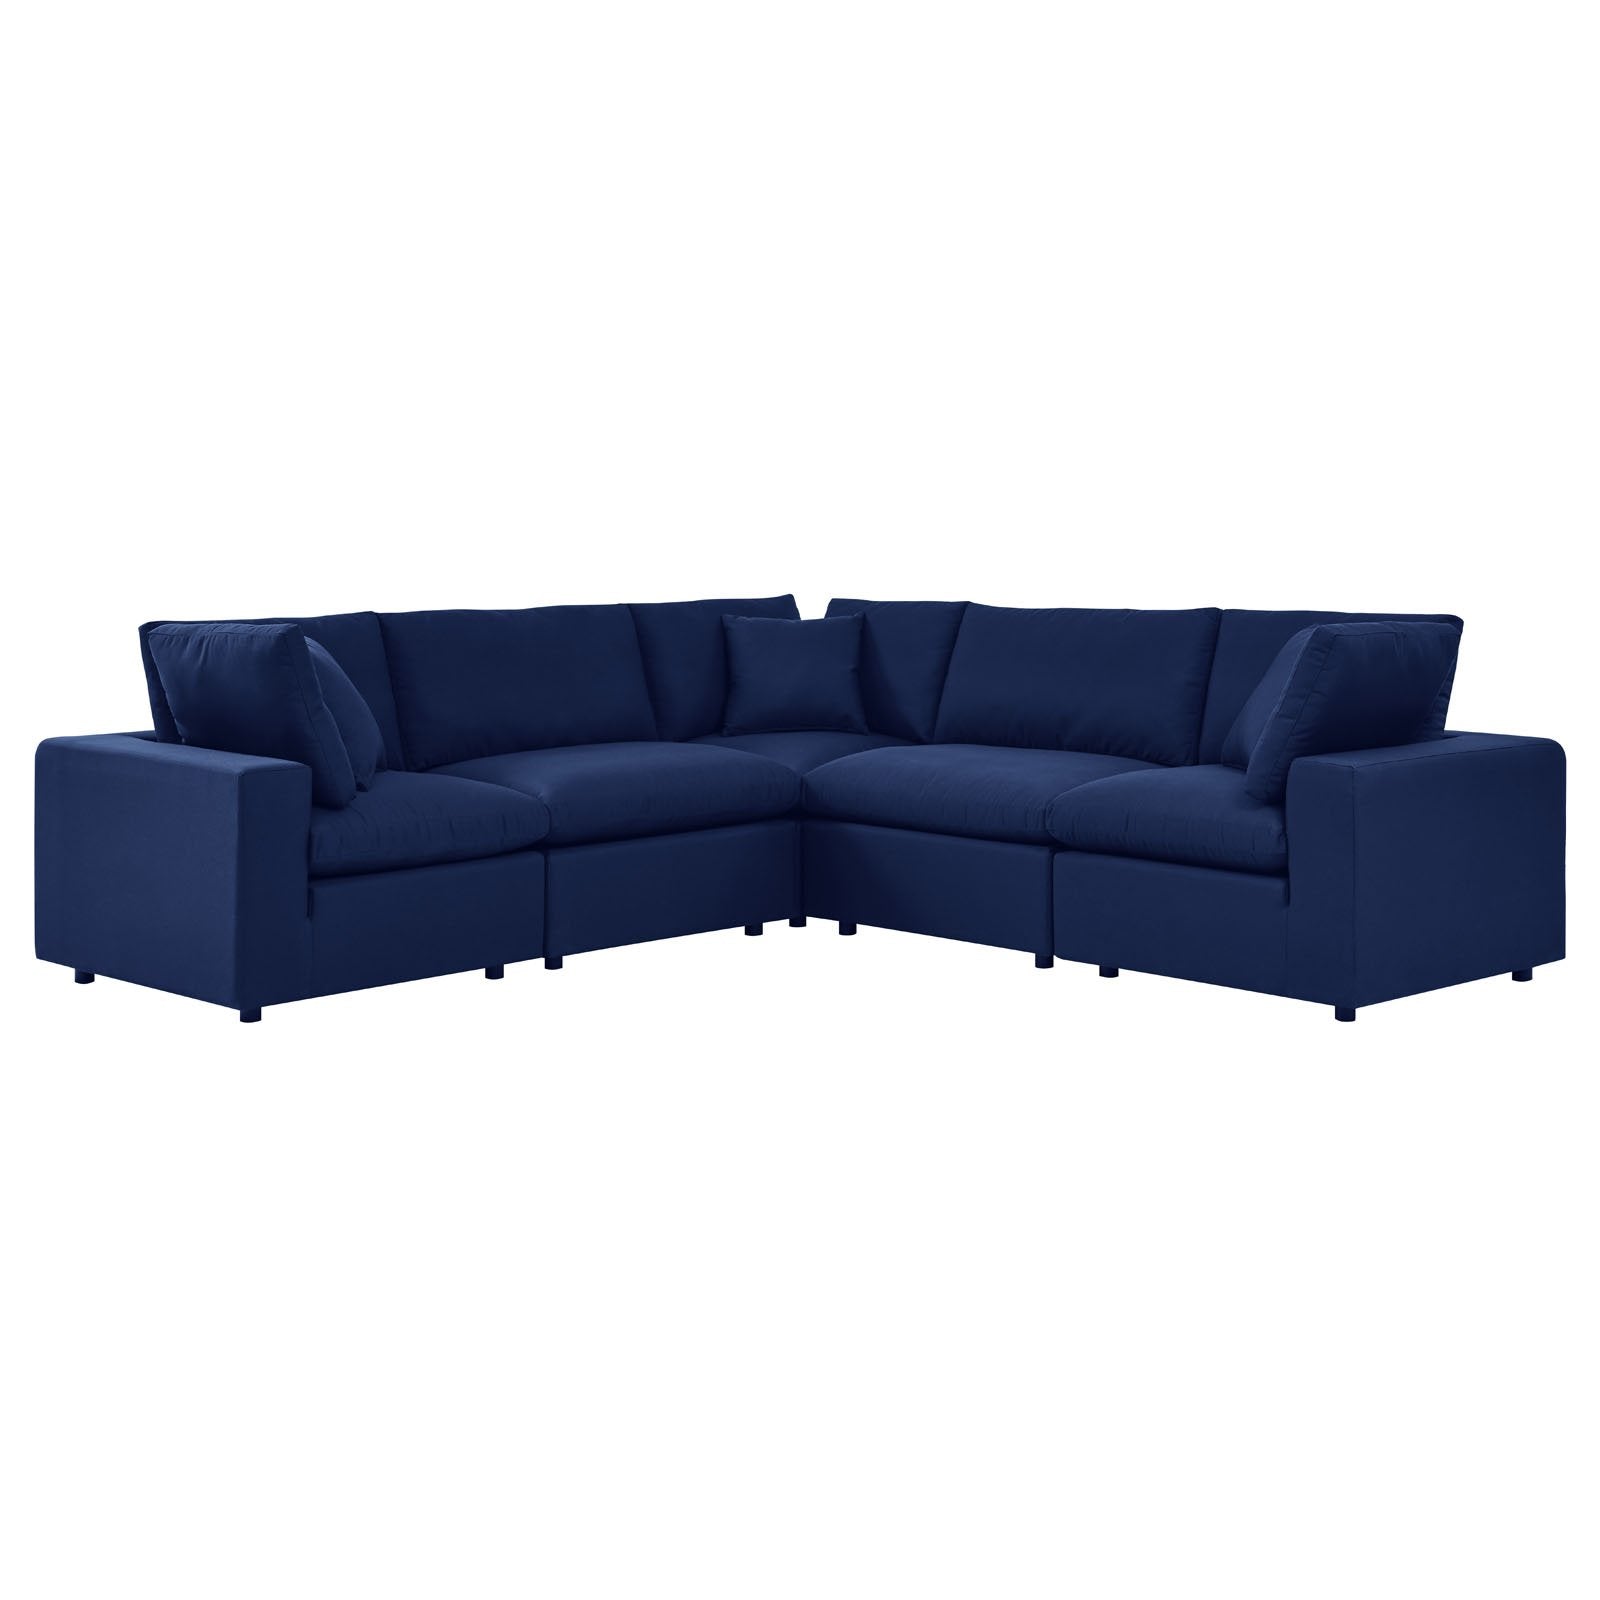 Commix 5-Piece Sunbrella® Outdoor Patio Sectional Sofa